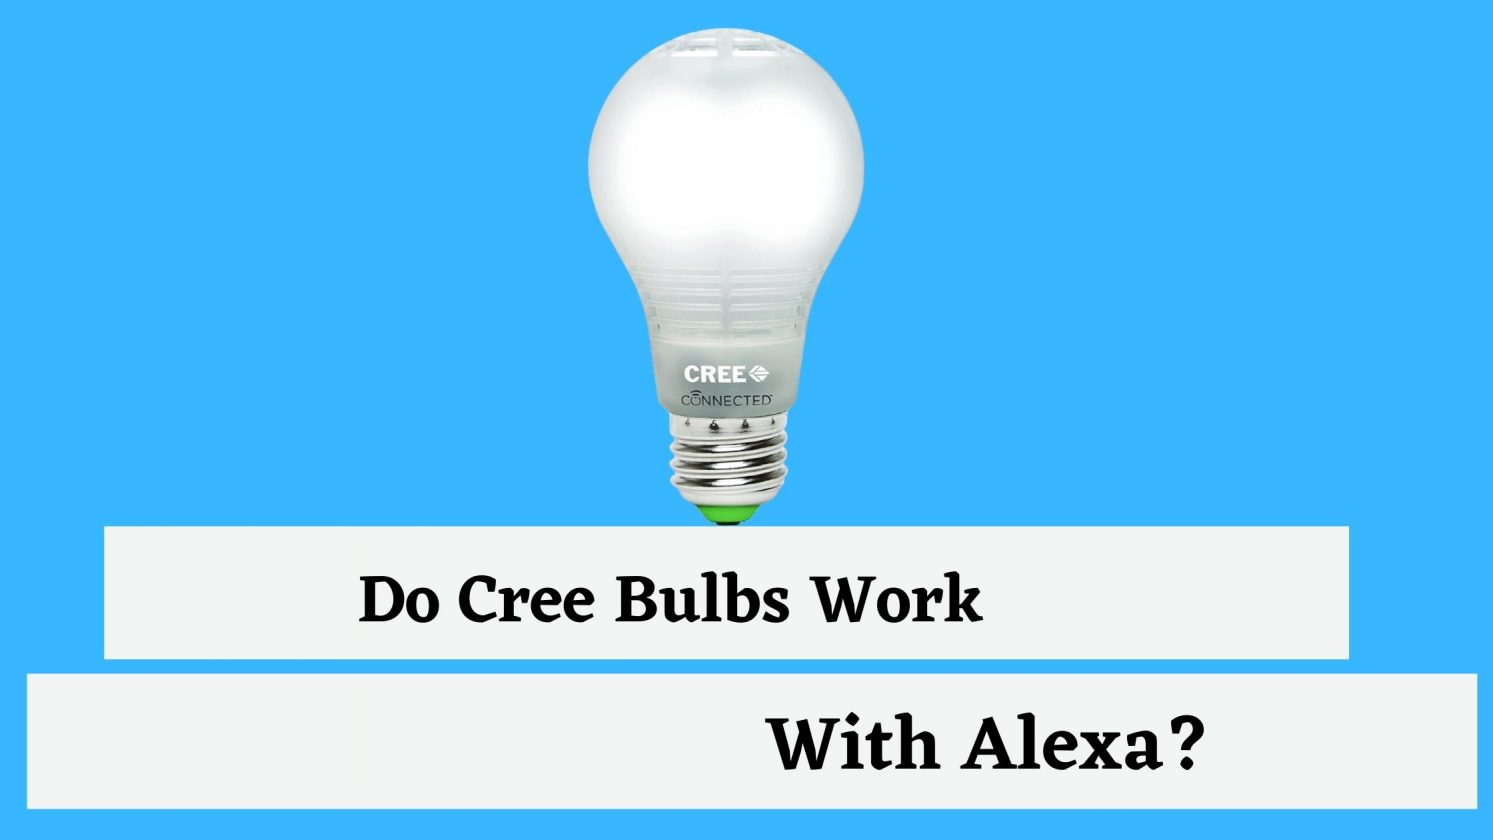 Do Cree Bulbs Work With Alexa?